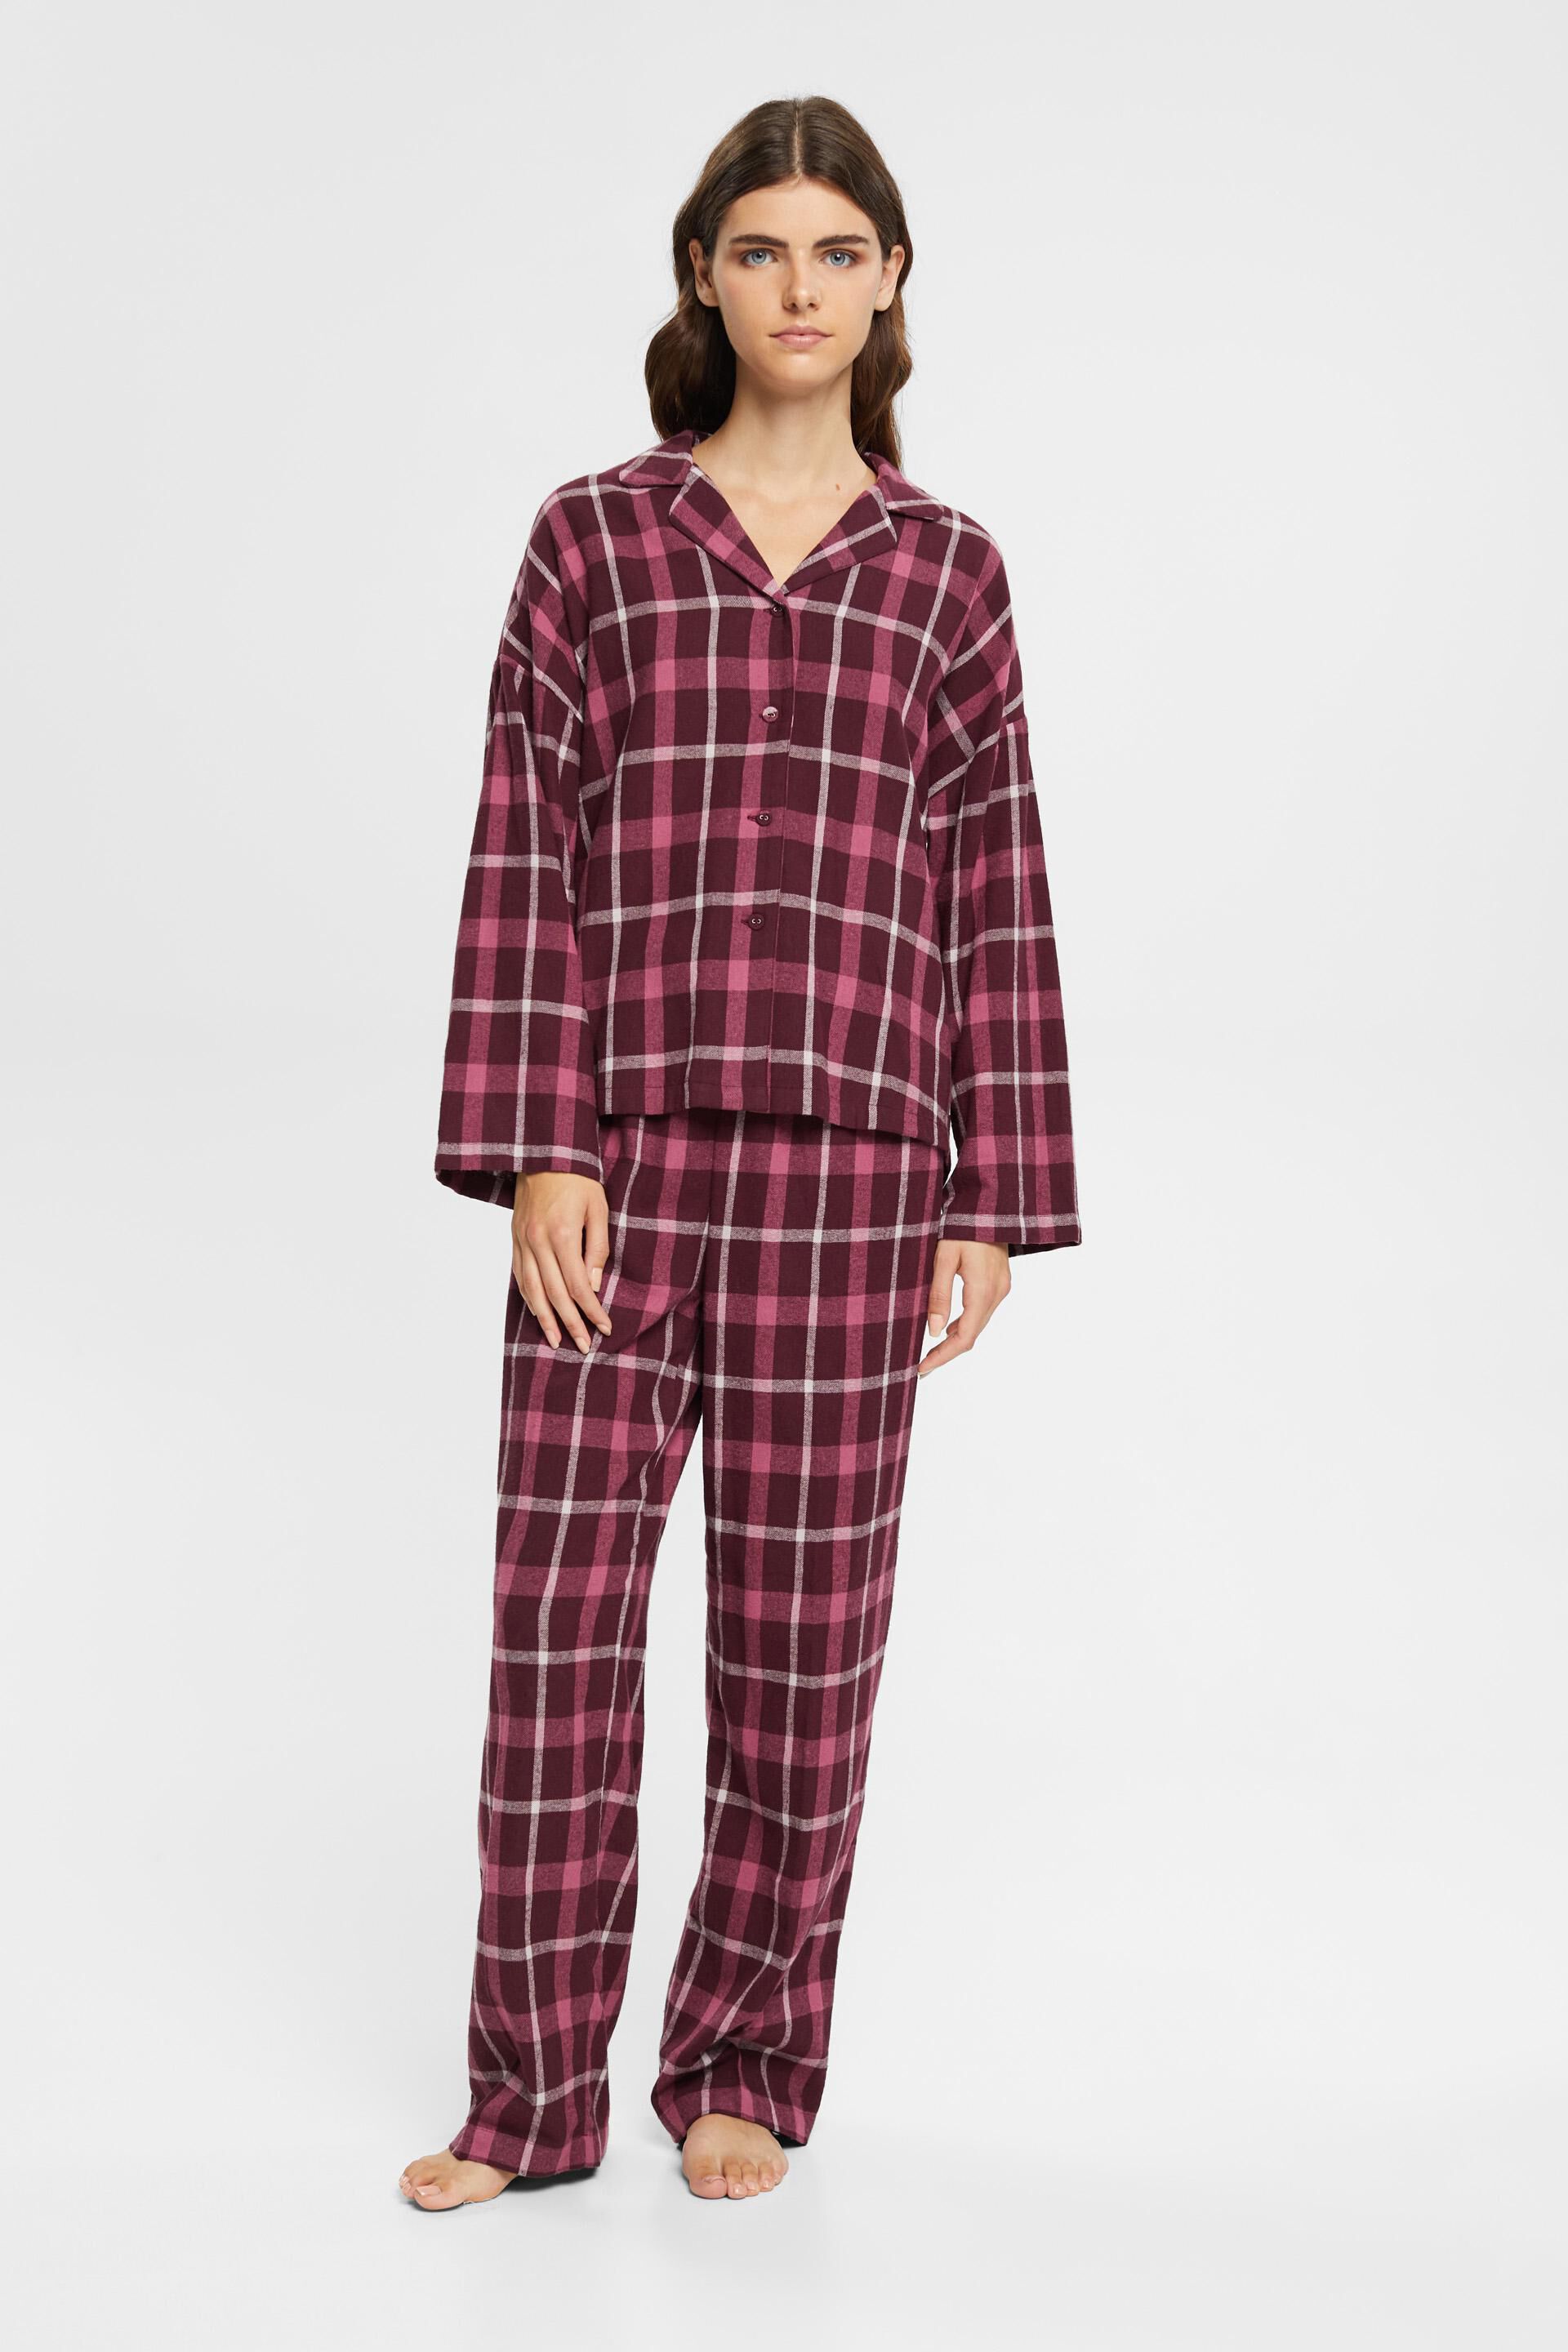 Kleding Dameskleding Pyjamas & Badjassen Pyjamashorts & Pyjamabroeken Huidige MOOOOOD Dames Pyjama Set 